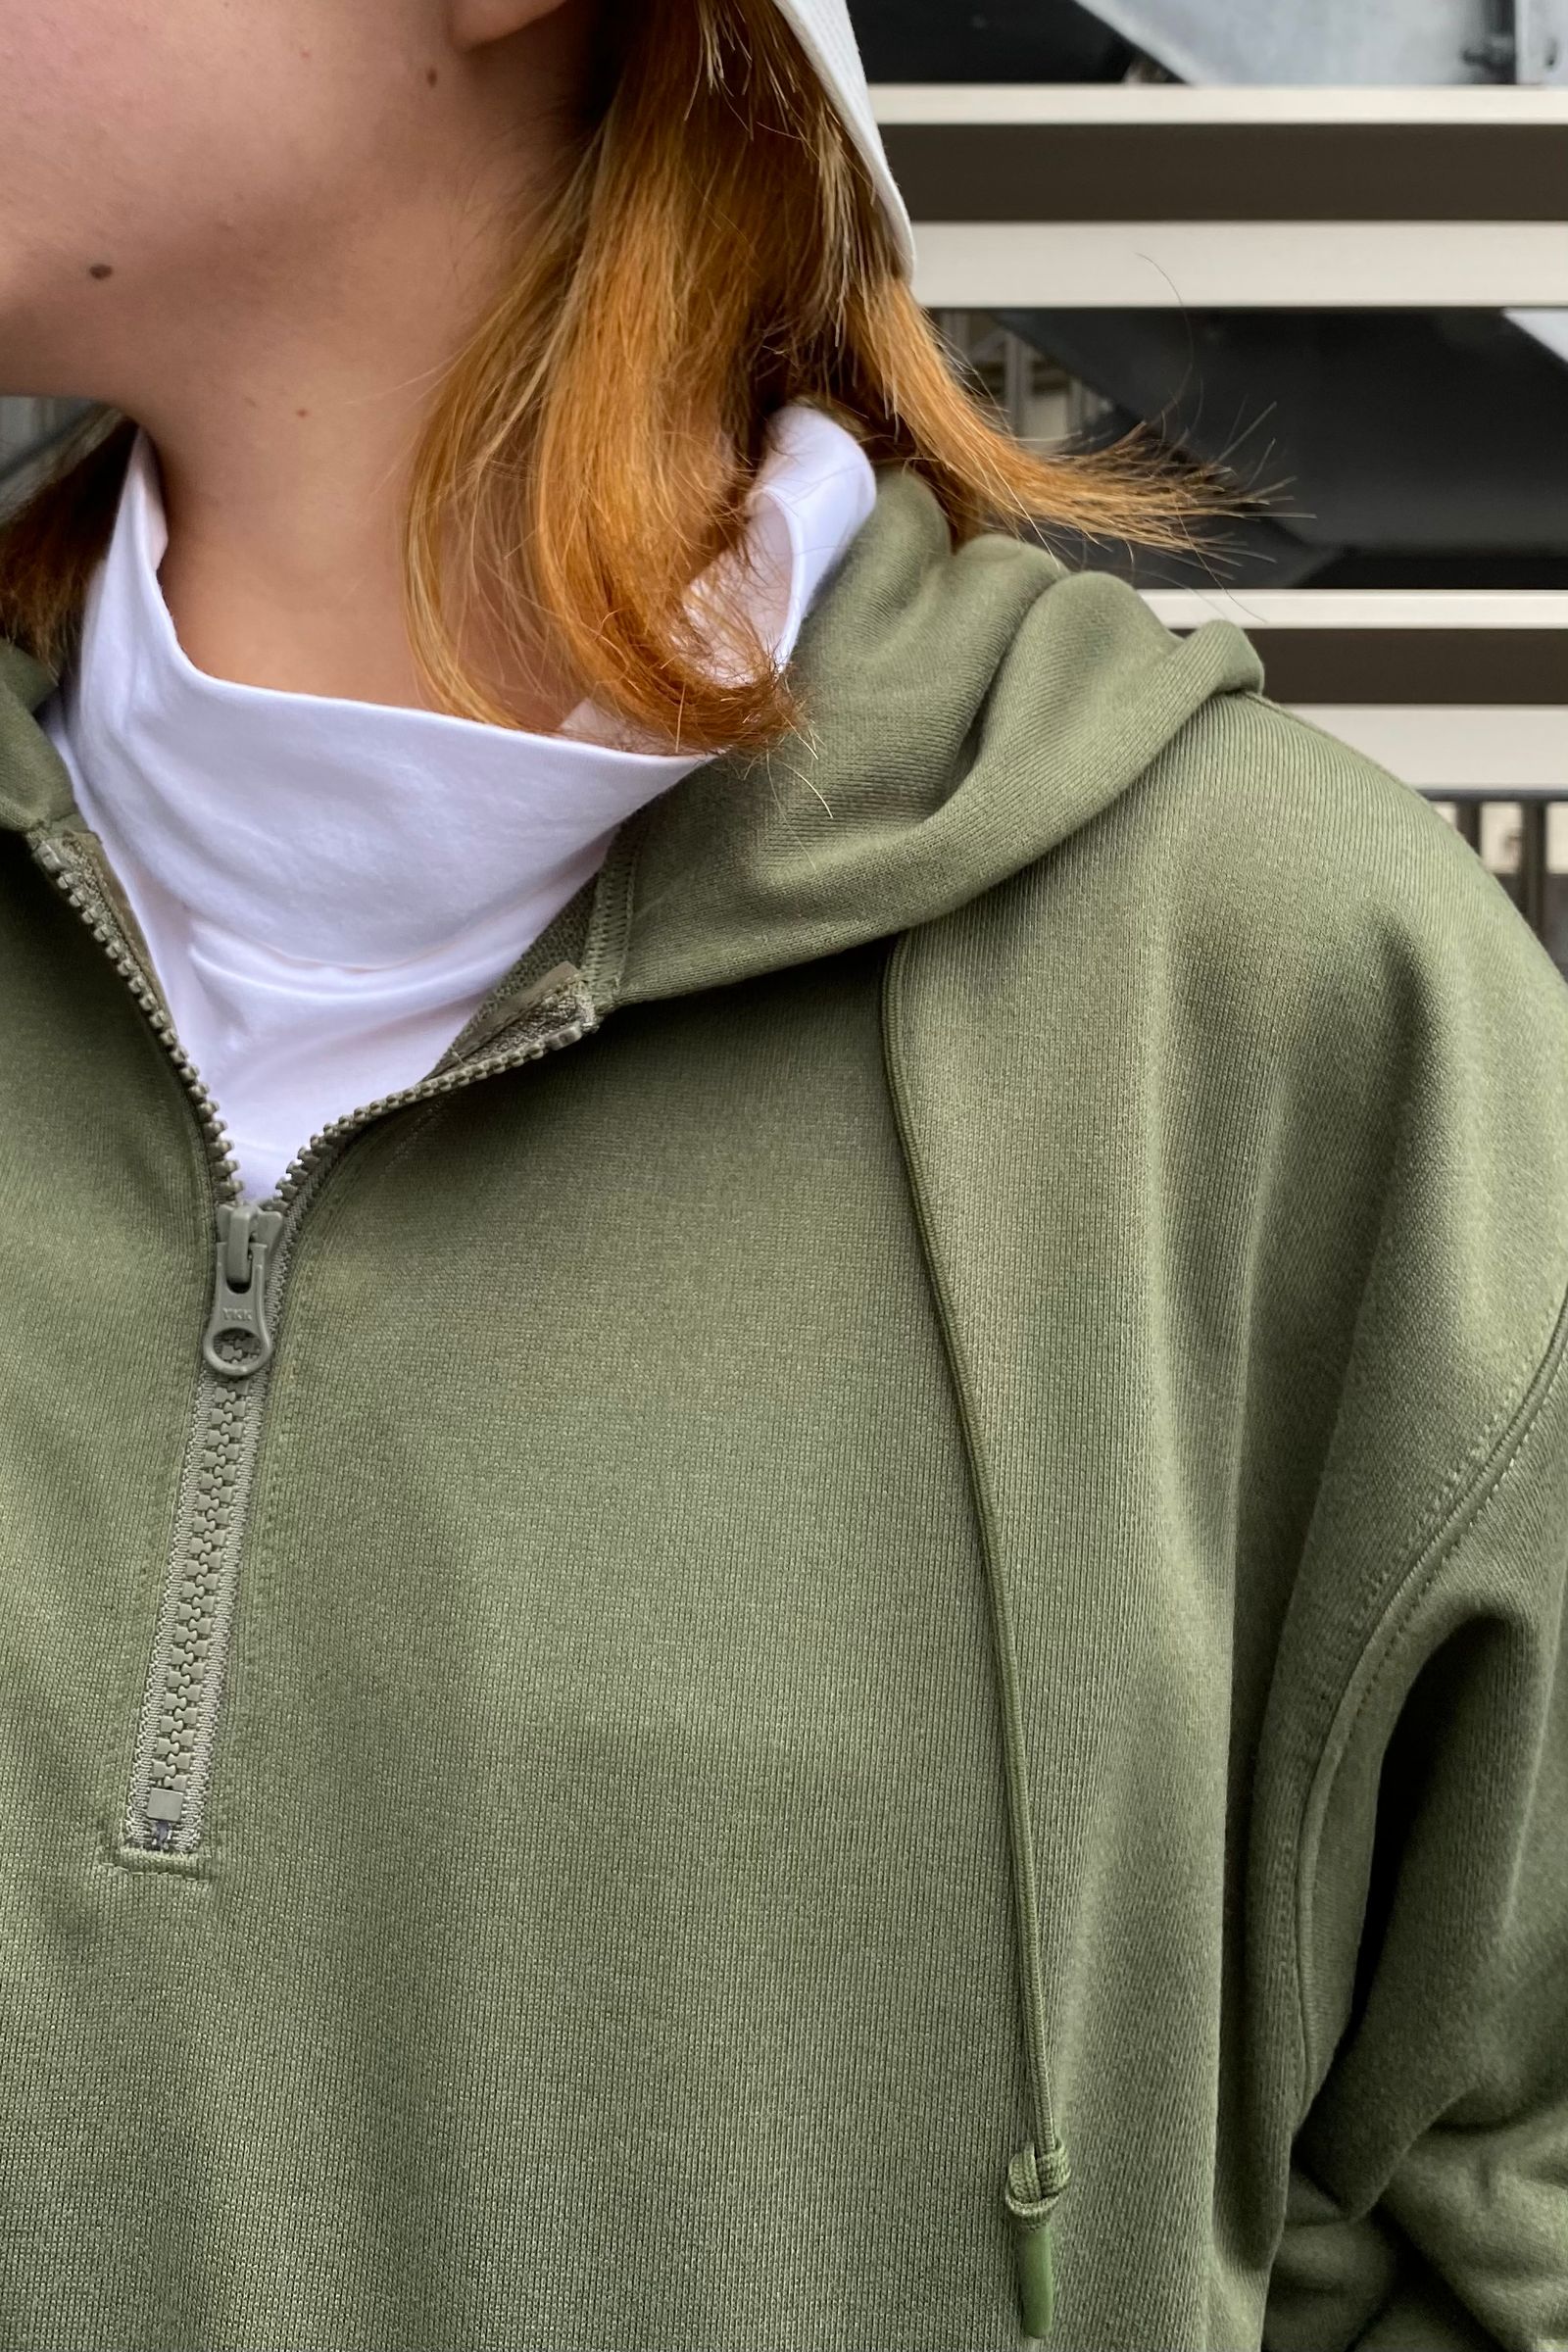 DAIWA PIER39 - women's tech sweat half zip hoodie -olive green